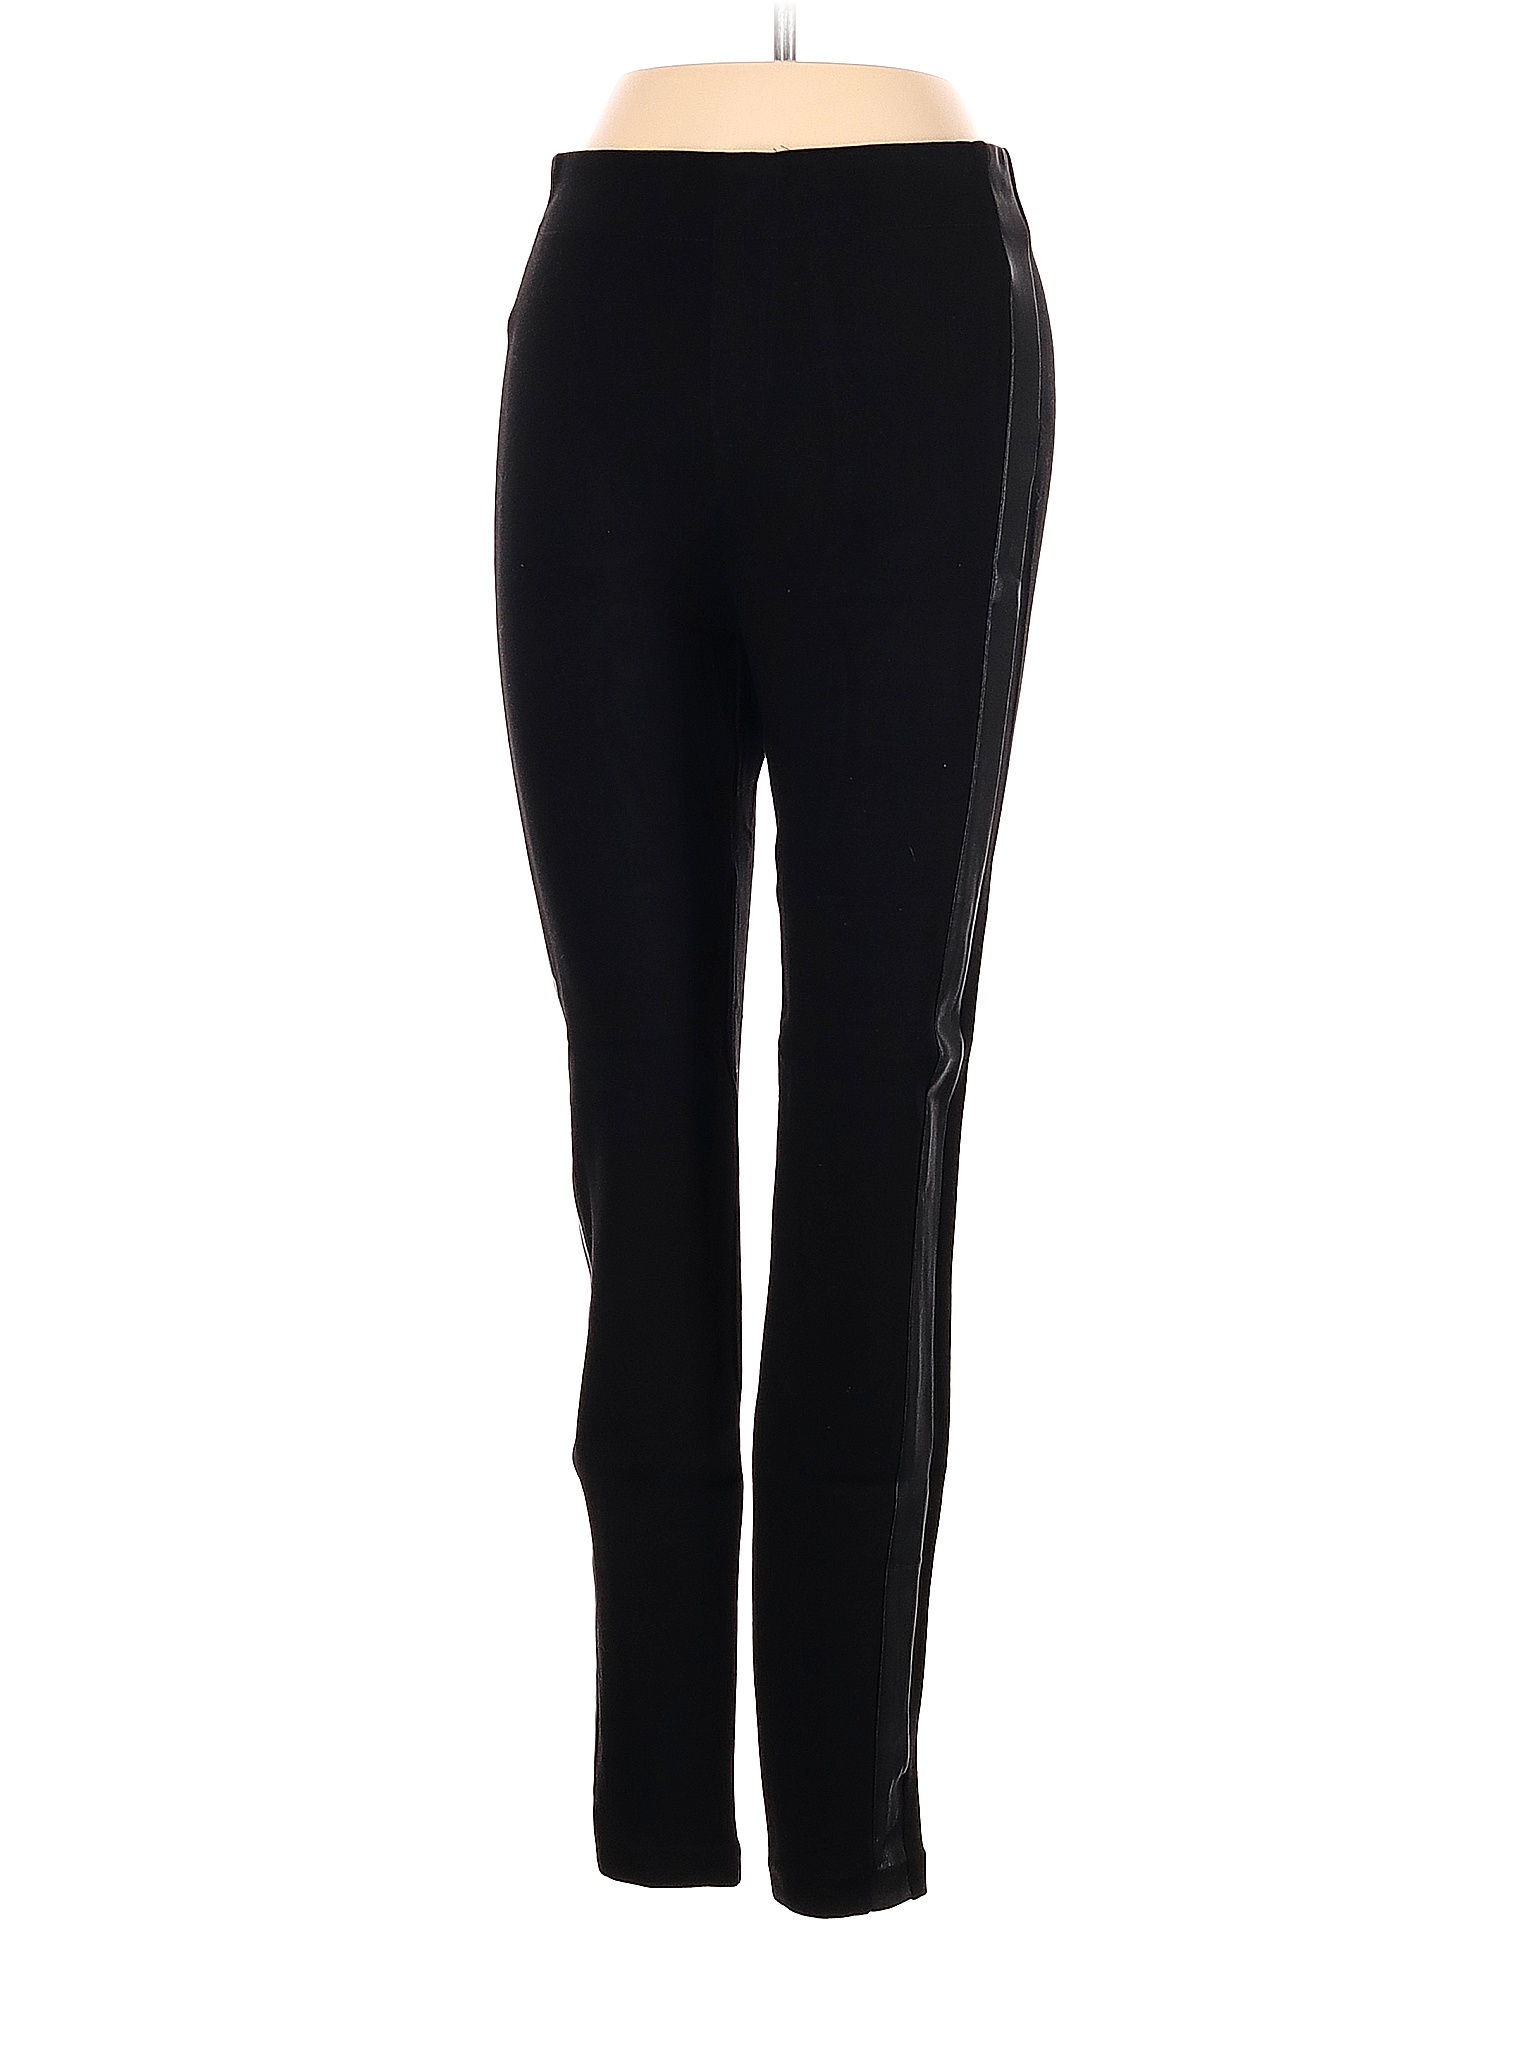 Trafaluc by Zara Solid Black Leggings Size S - 70% off | thredUP